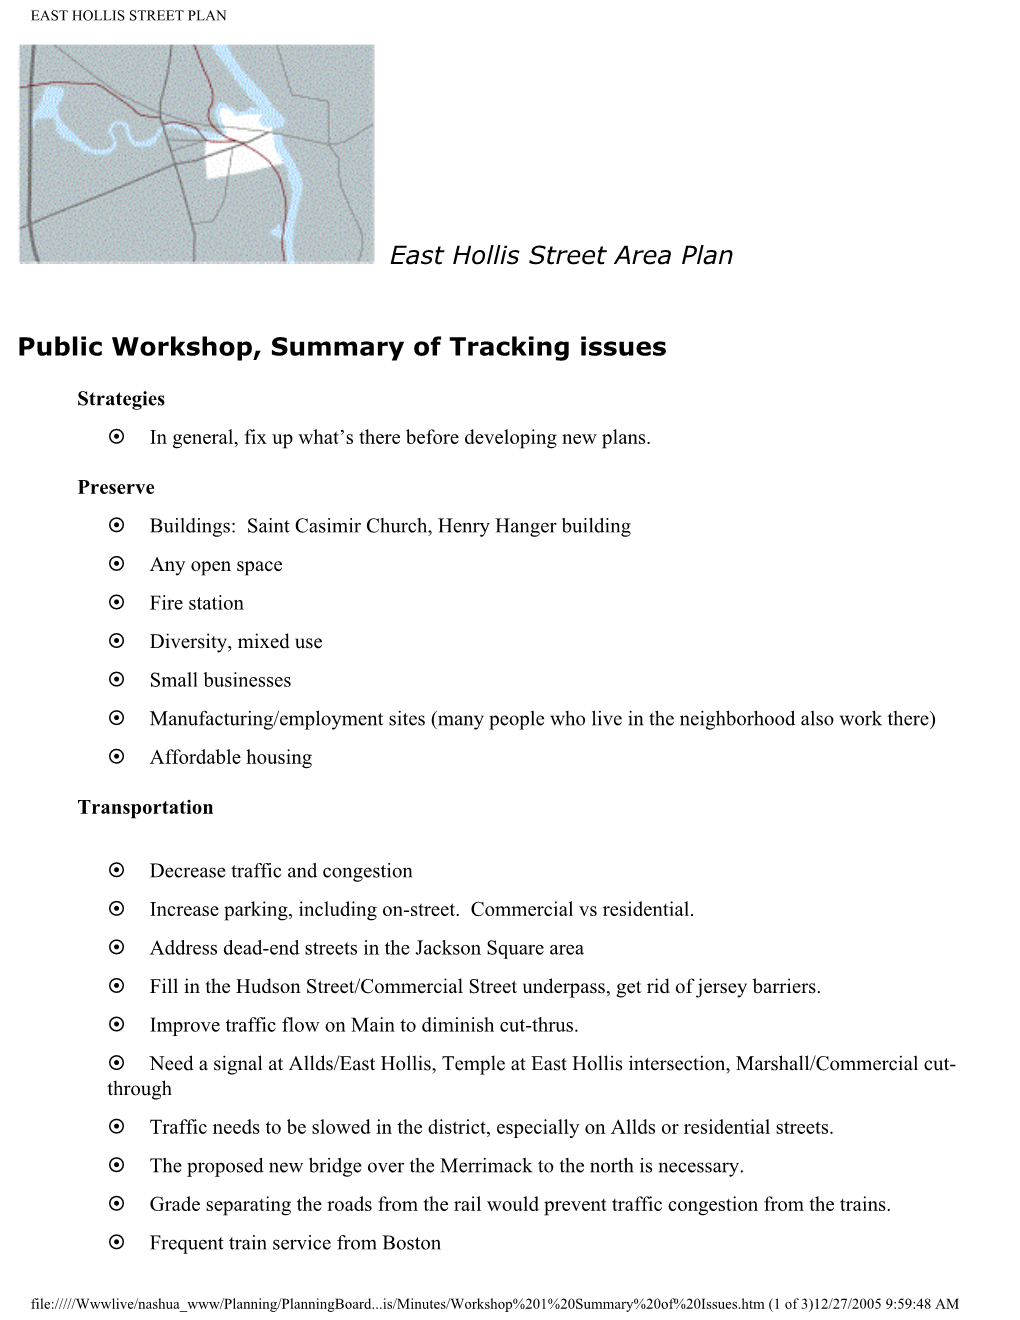 Public Workshop 1 Summary (PDF)